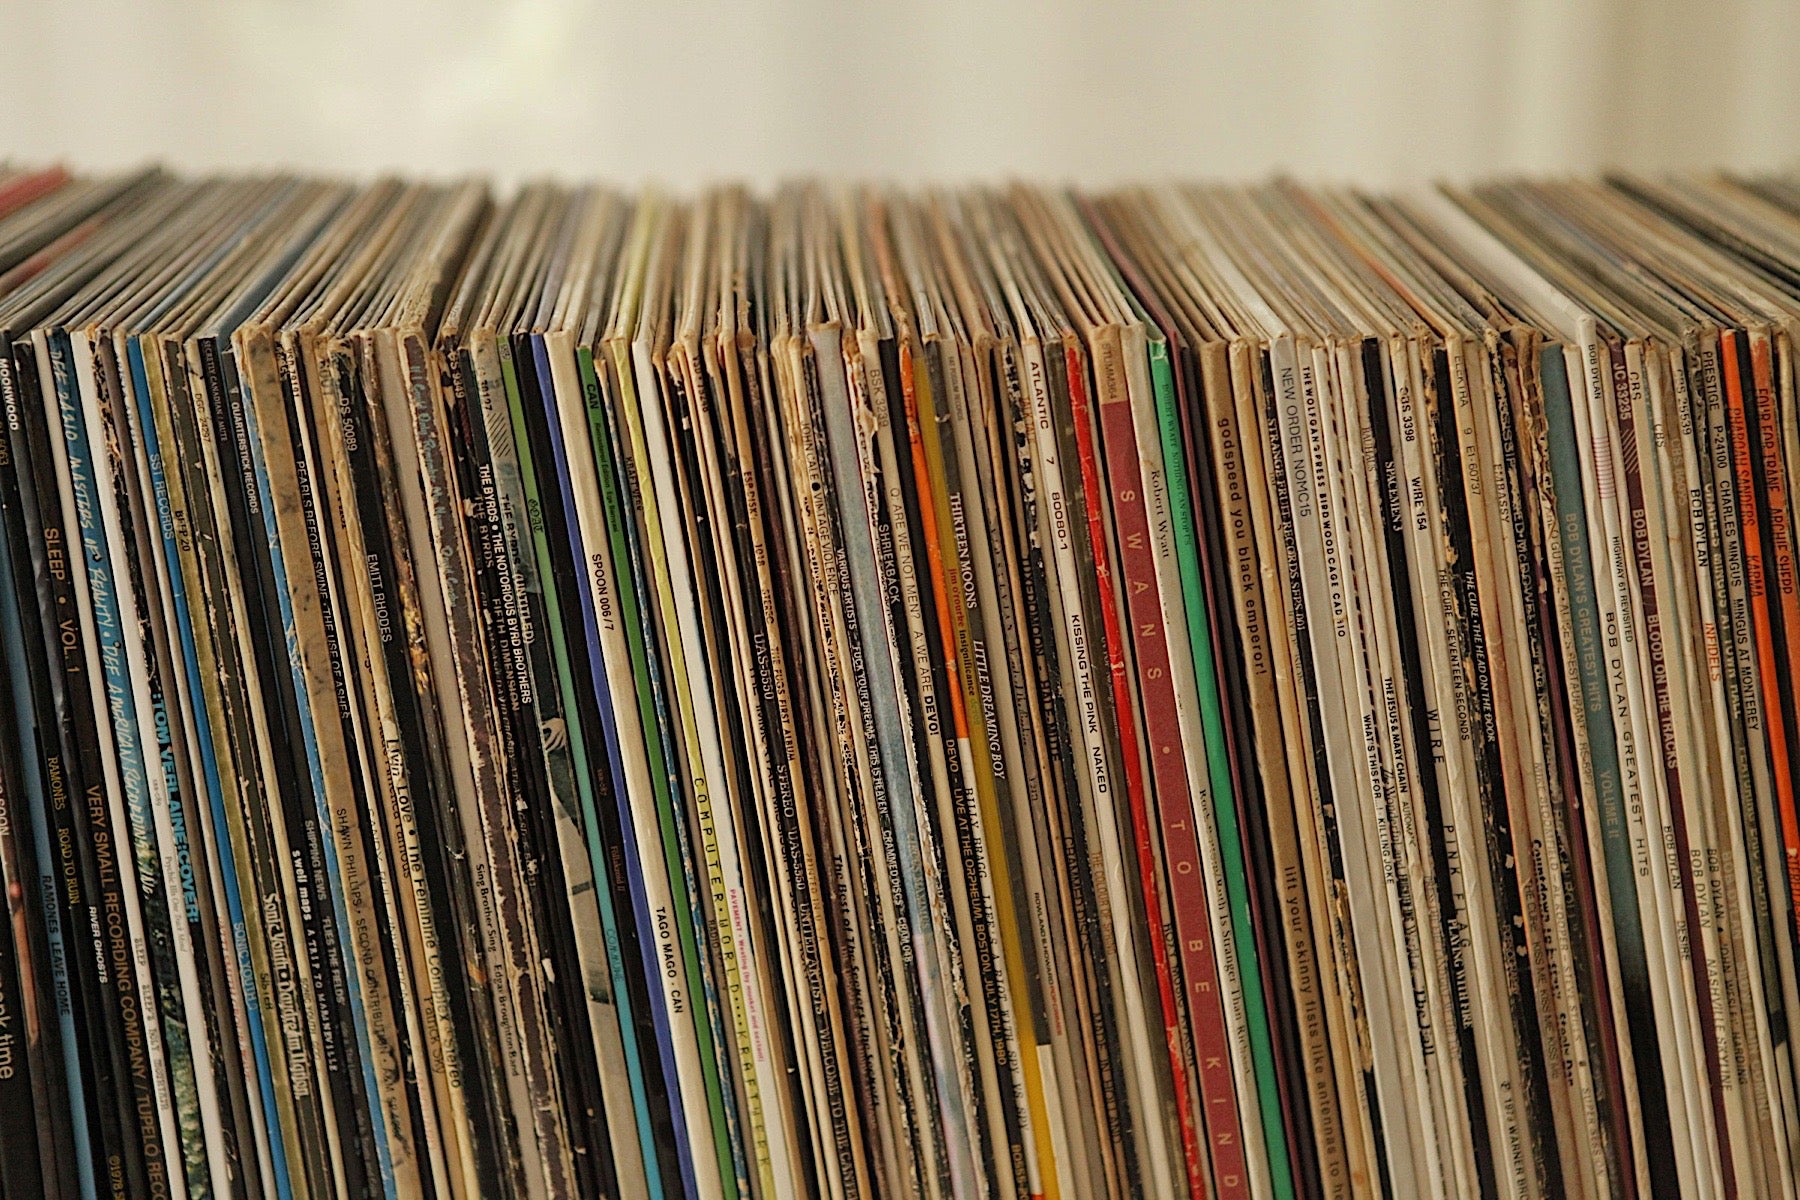 Stacks of vinyl records